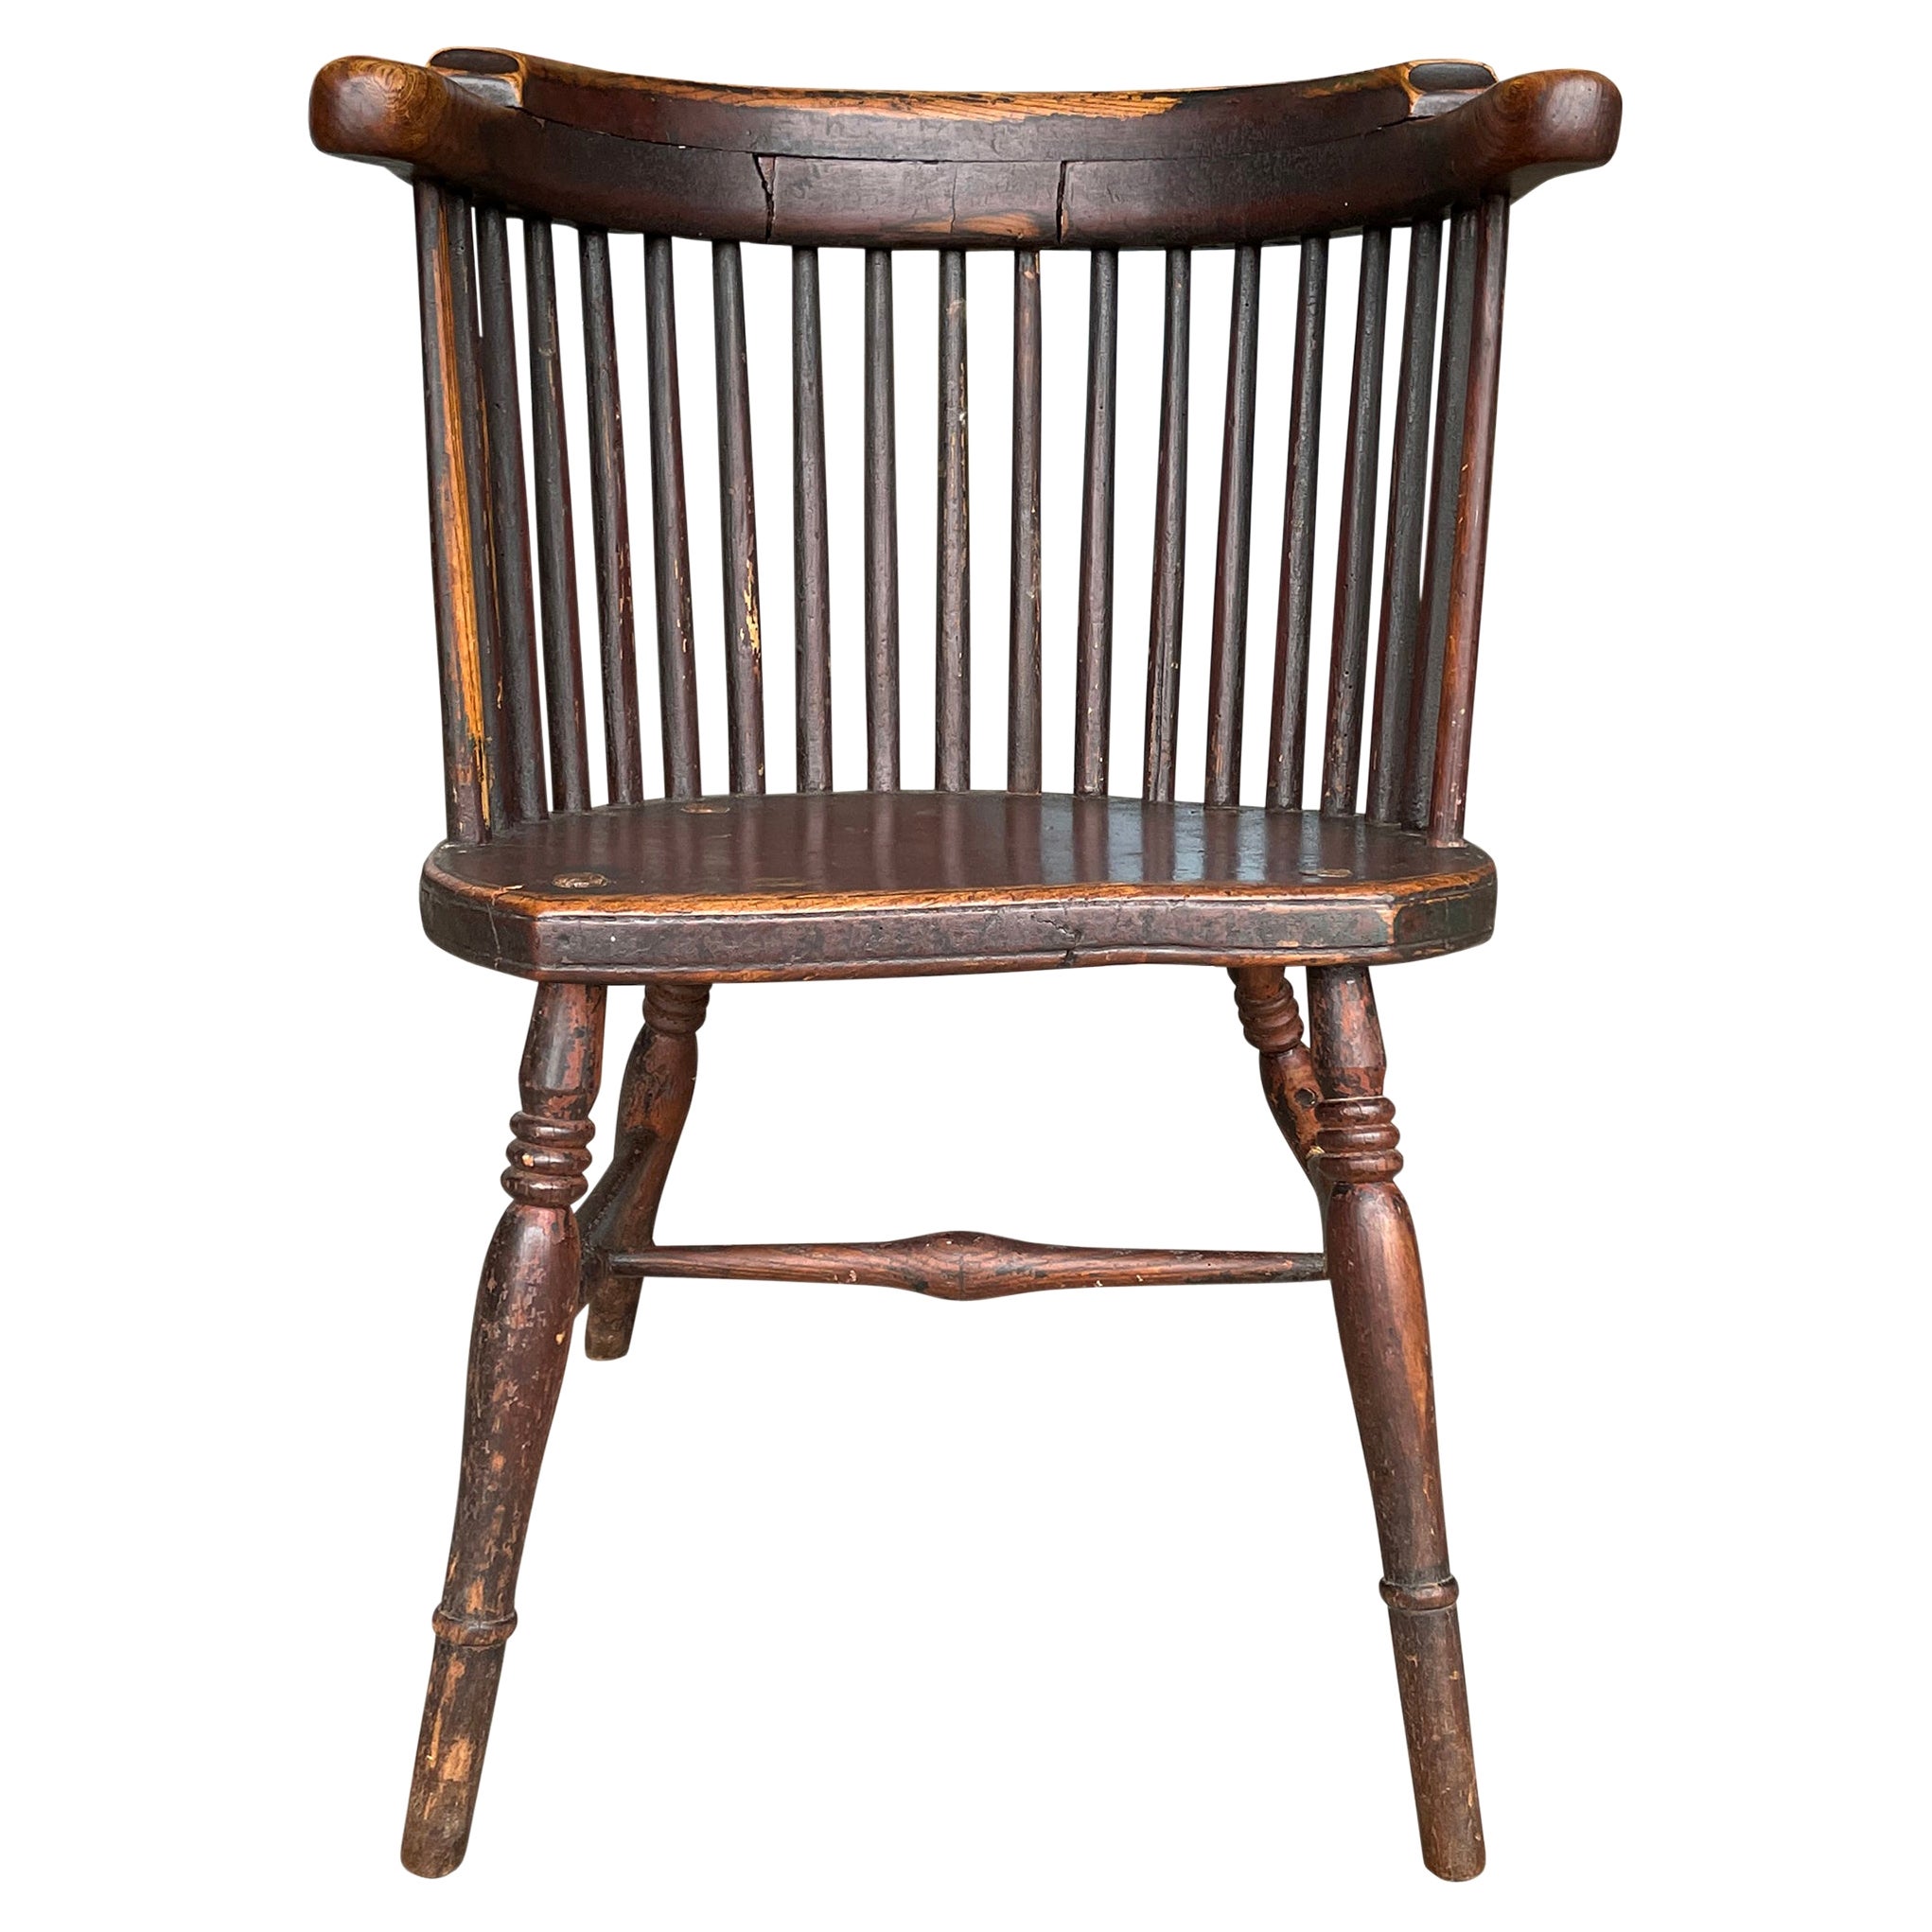 19th Century English Barrelback Windsor Chair